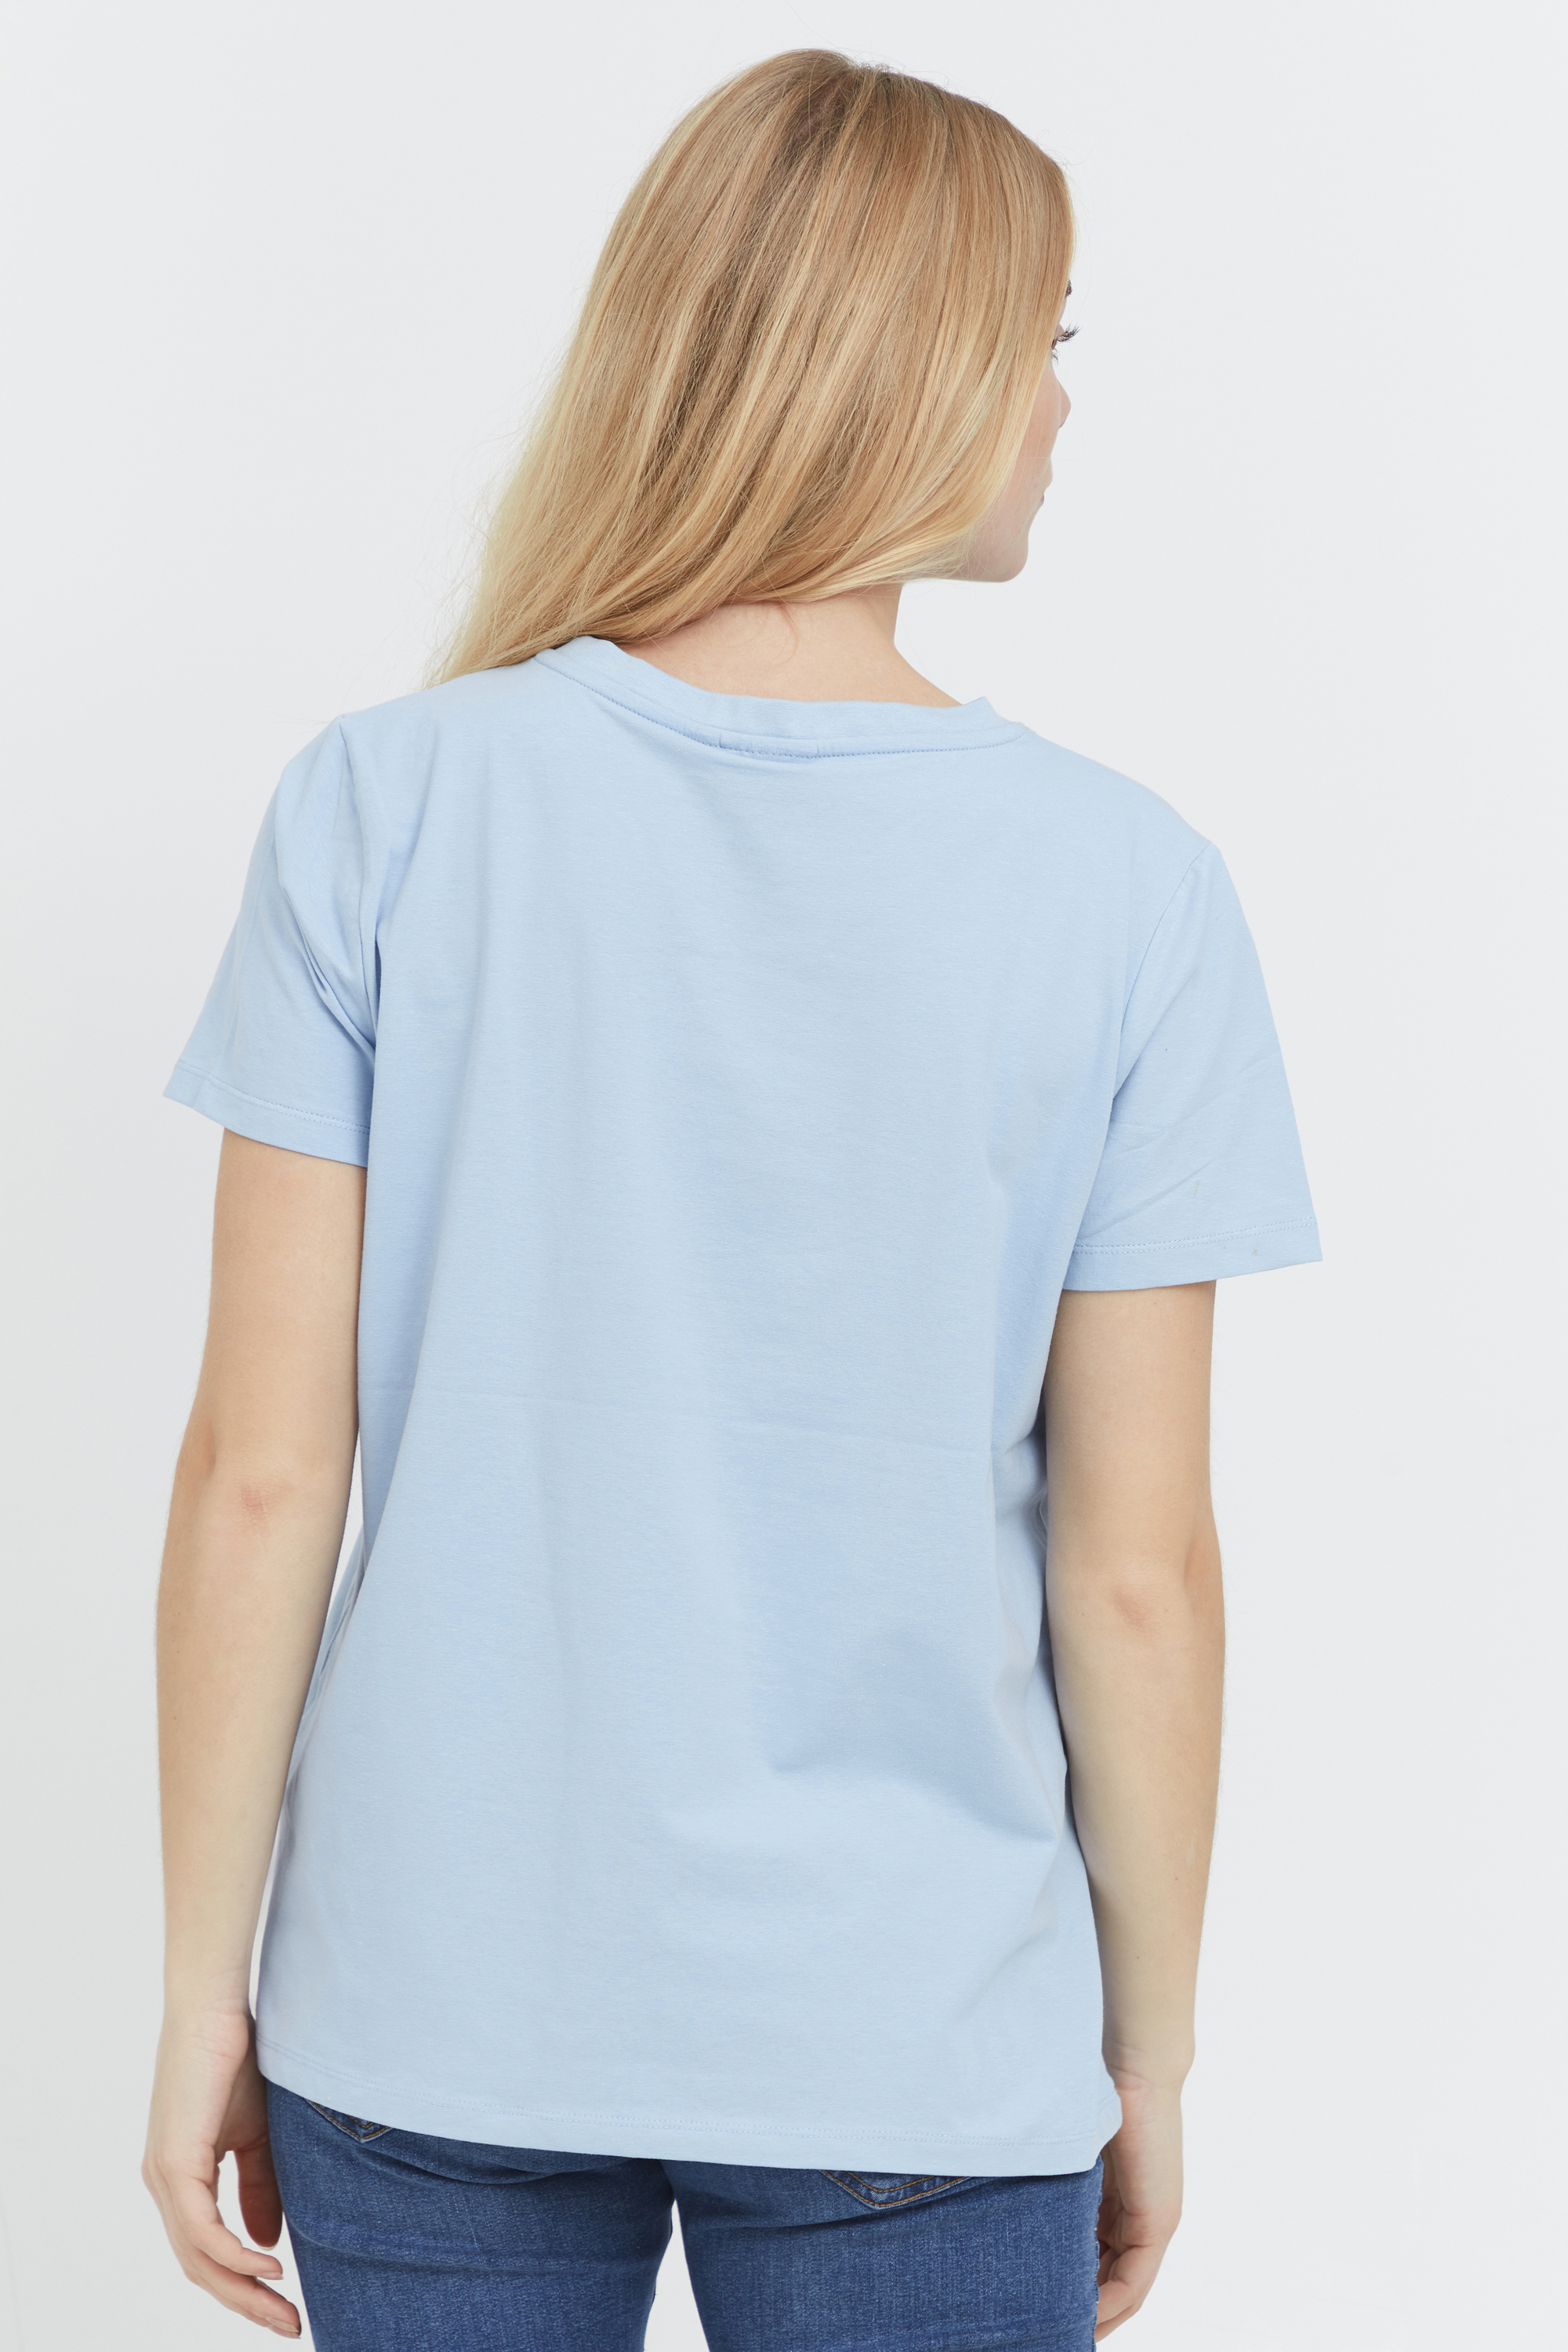 Fransa T-Shirt in Blau 